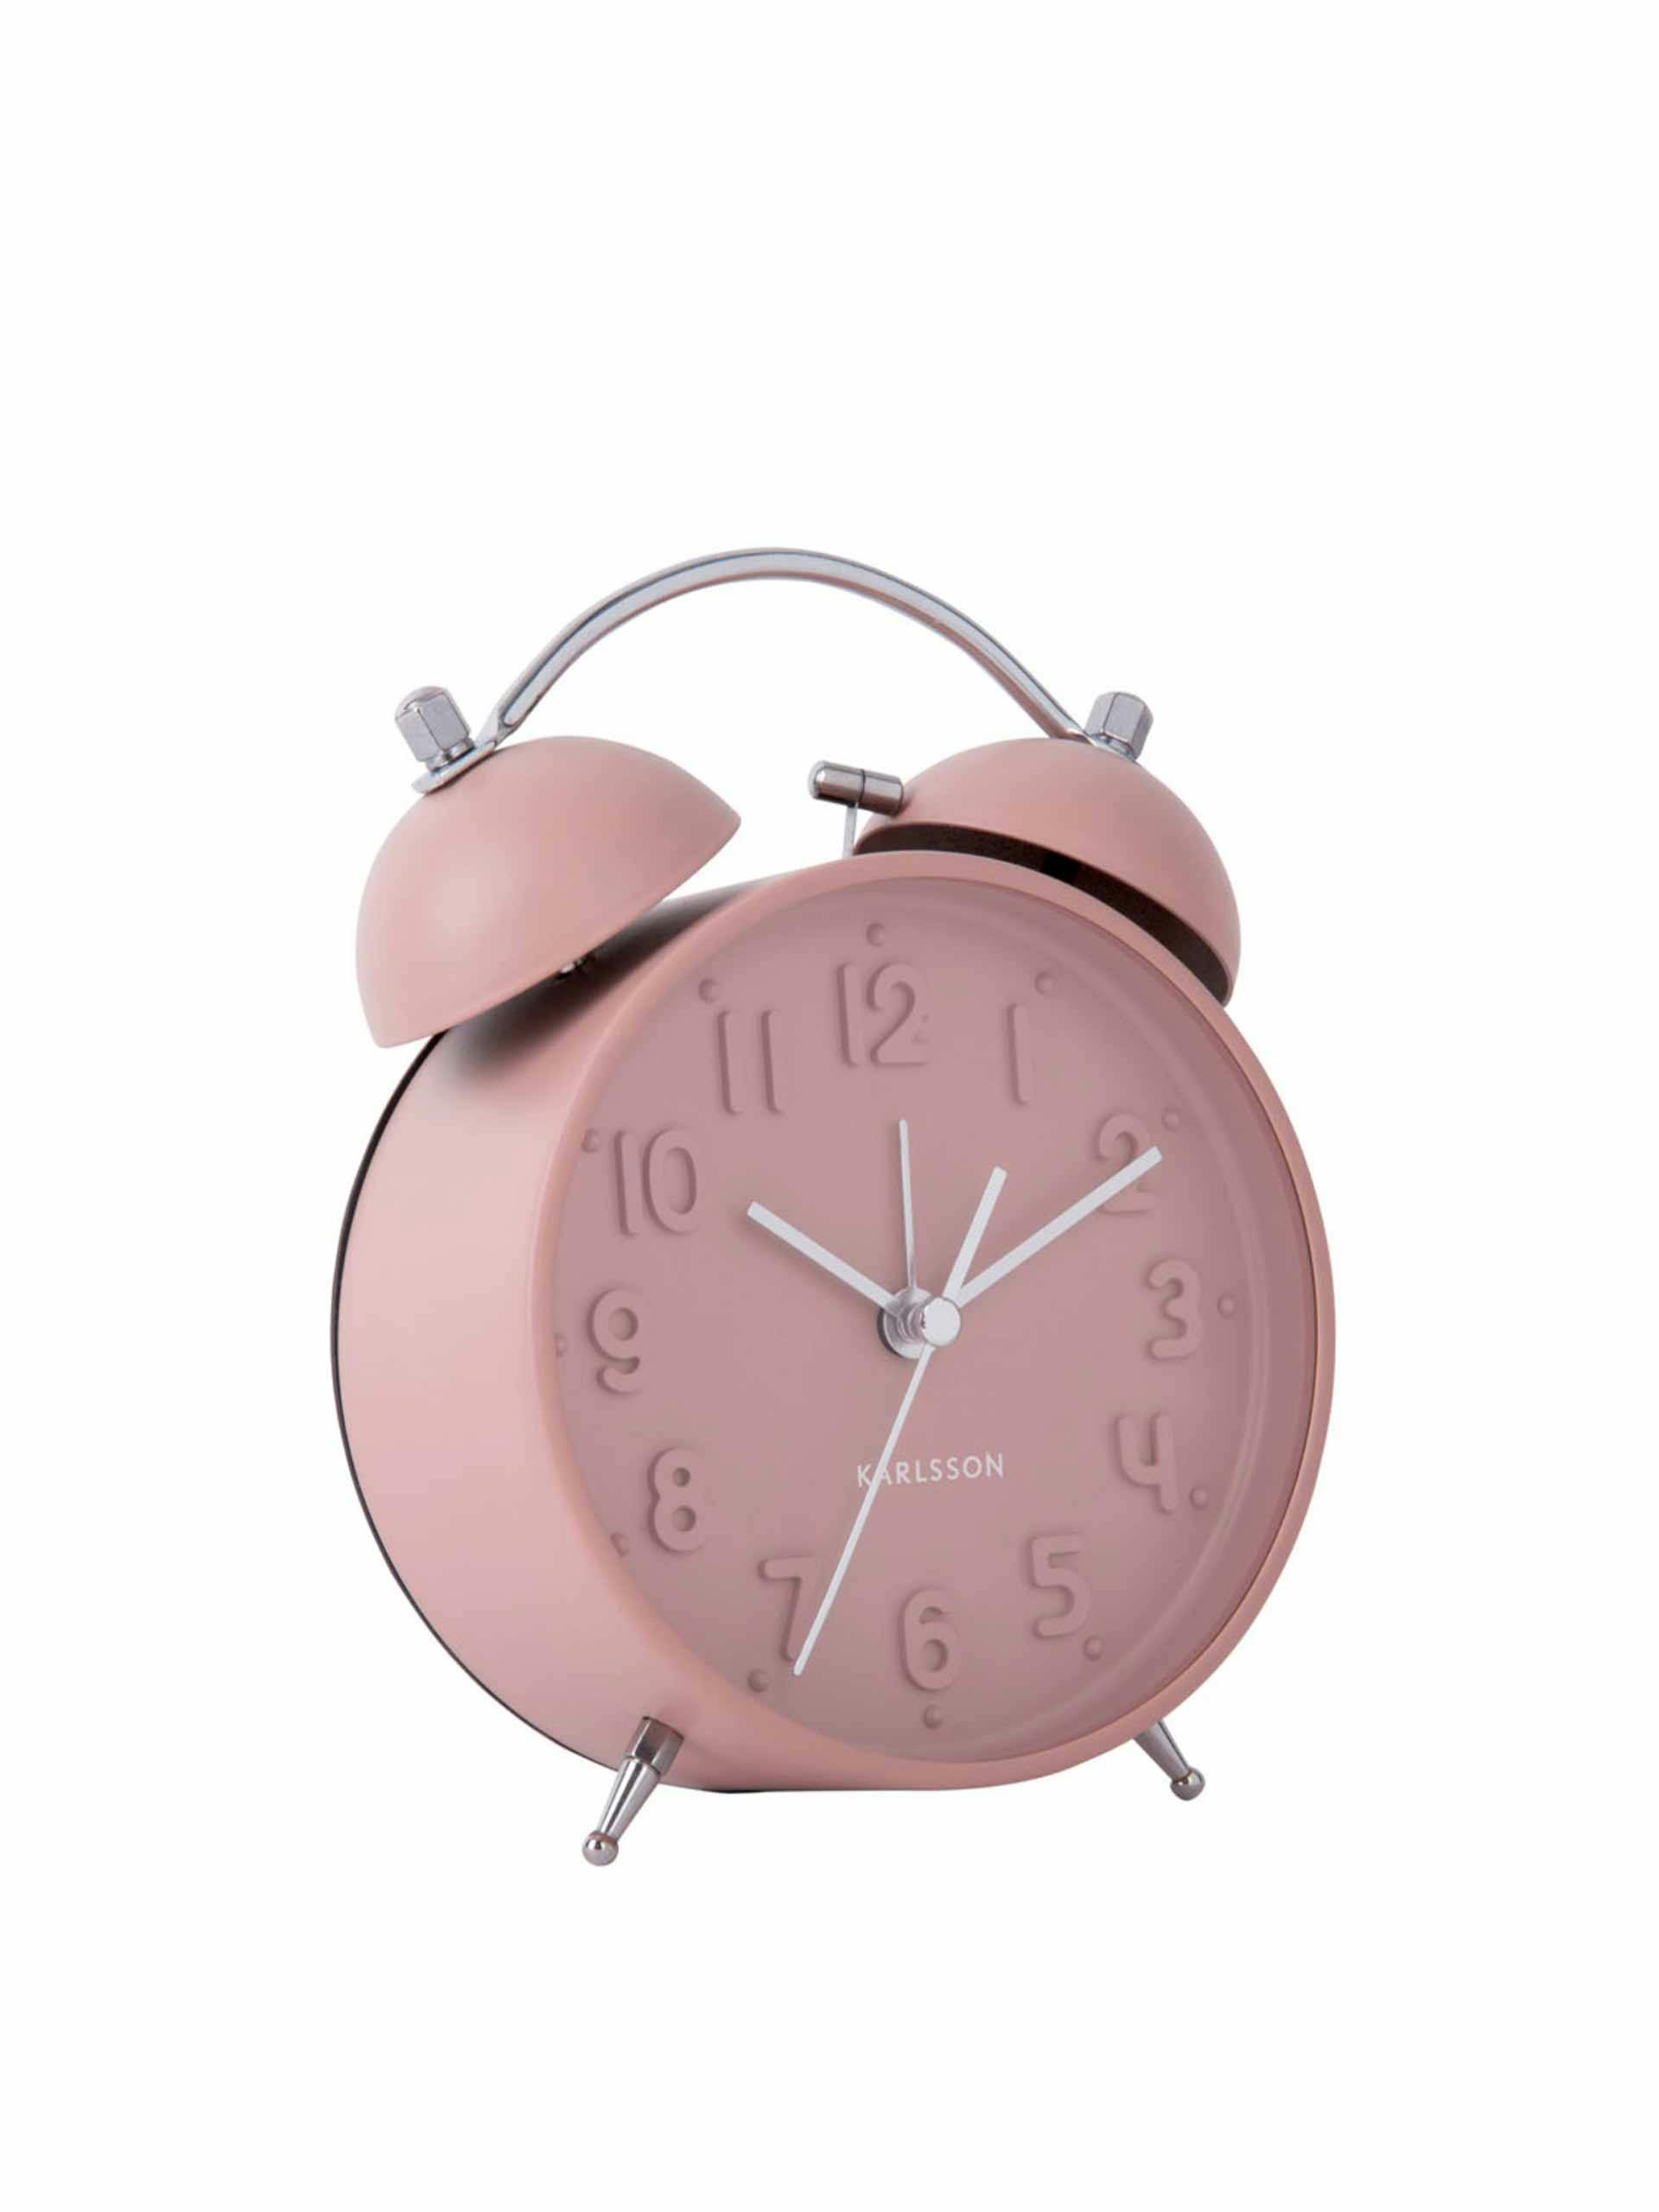 Iconic pink alarm clock